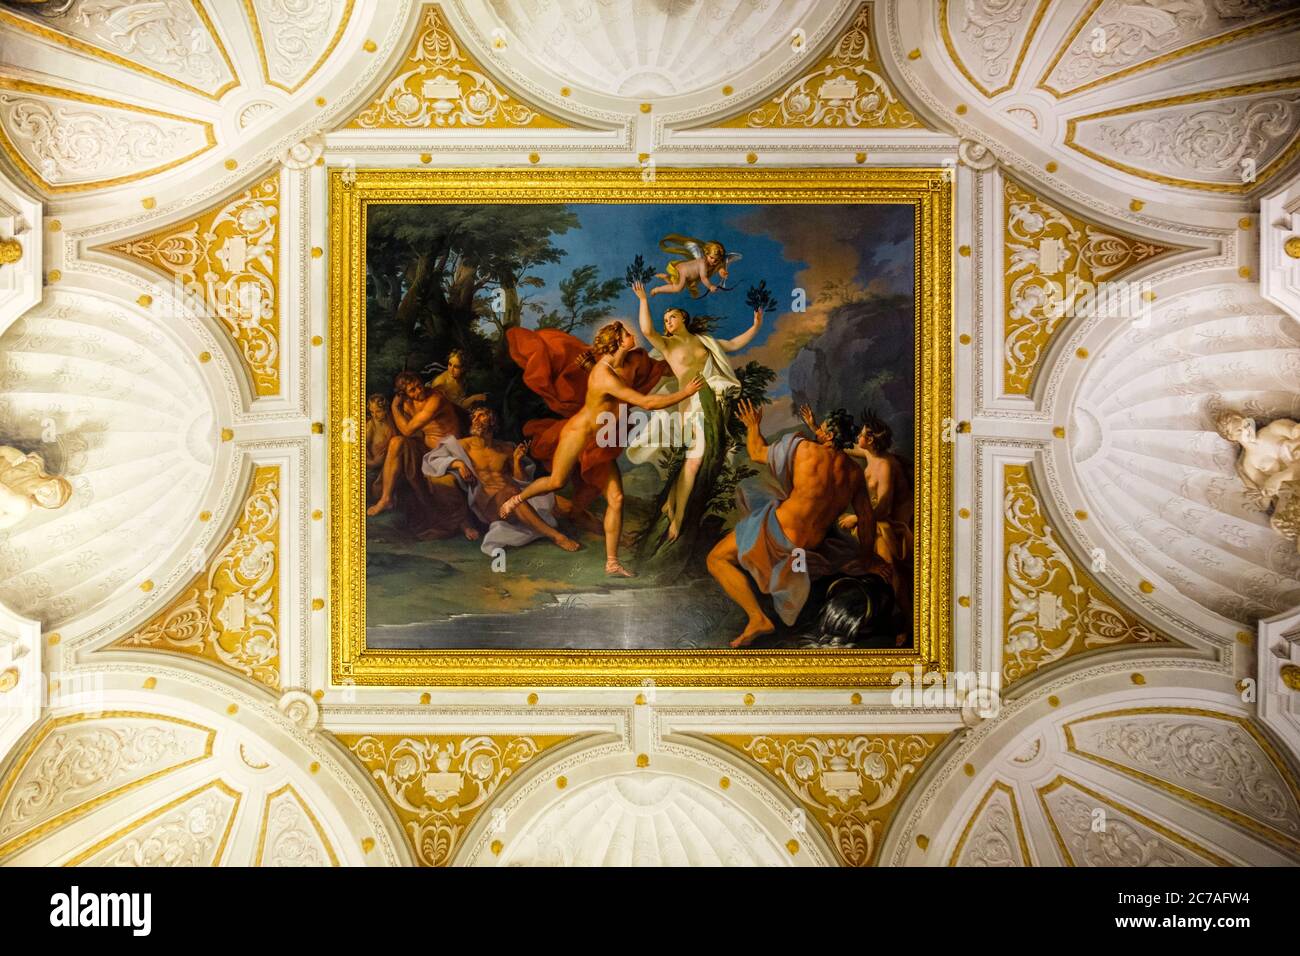 Pintura de techo La cúpula golpea Apolo (Apolo y Daphne) por Pietro  Angeletti, Museo Borghese Gallery (Galleria Borghese), Roma, Italia  Fotografía de stock - Alamy